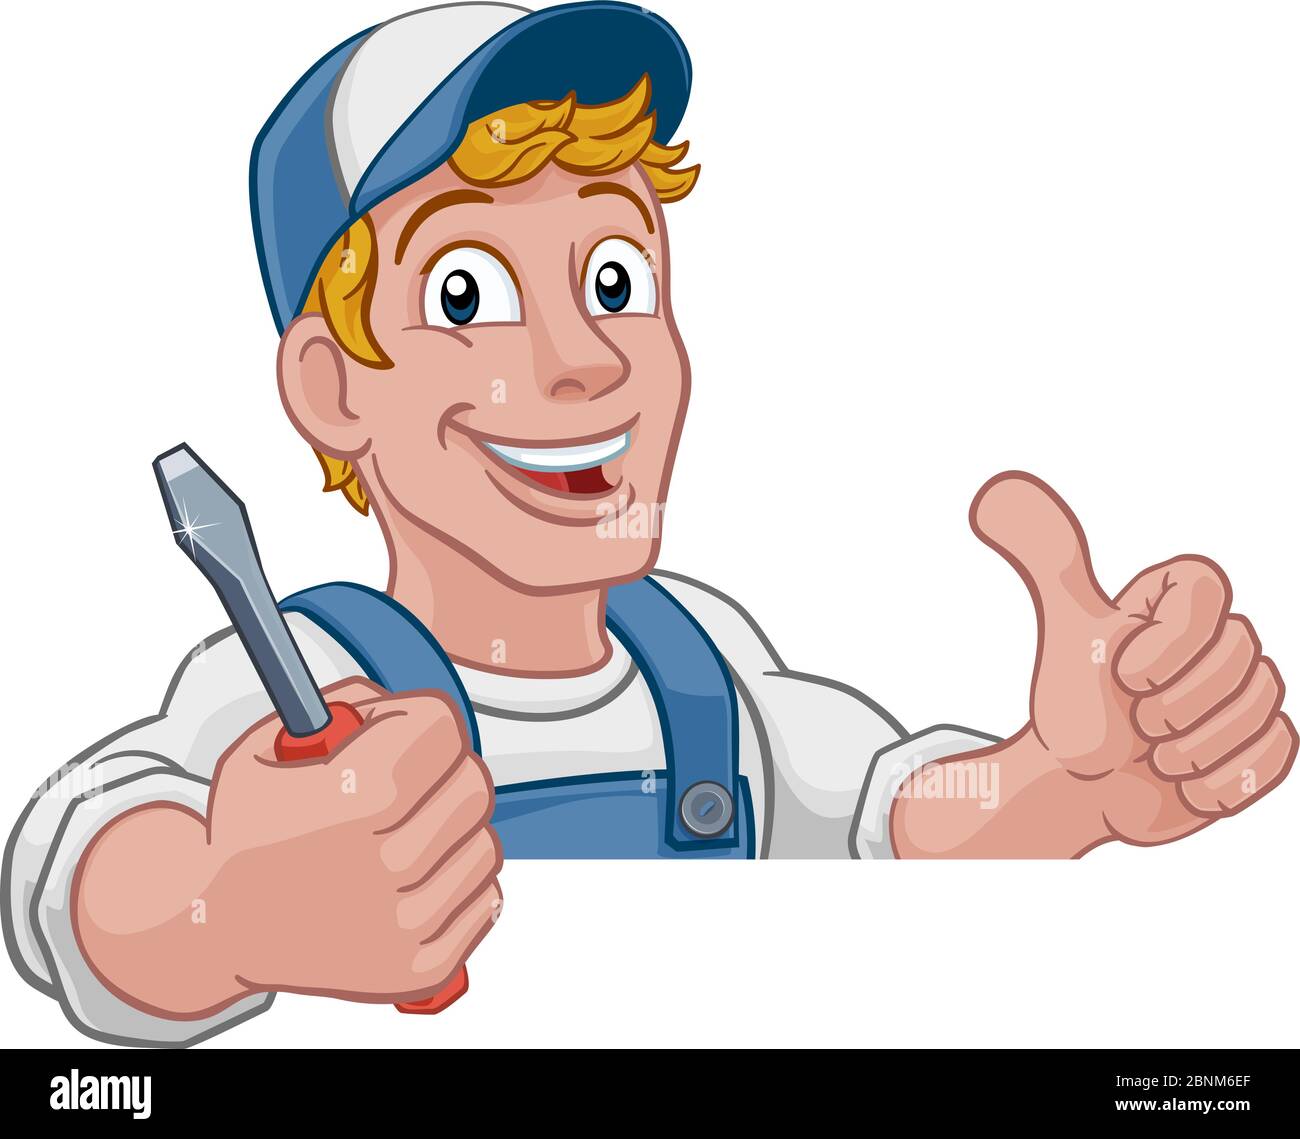 Elektriker Cartoon Heimwerker Klempner Mechaniker Stock-Vektorgrafik - Alamy